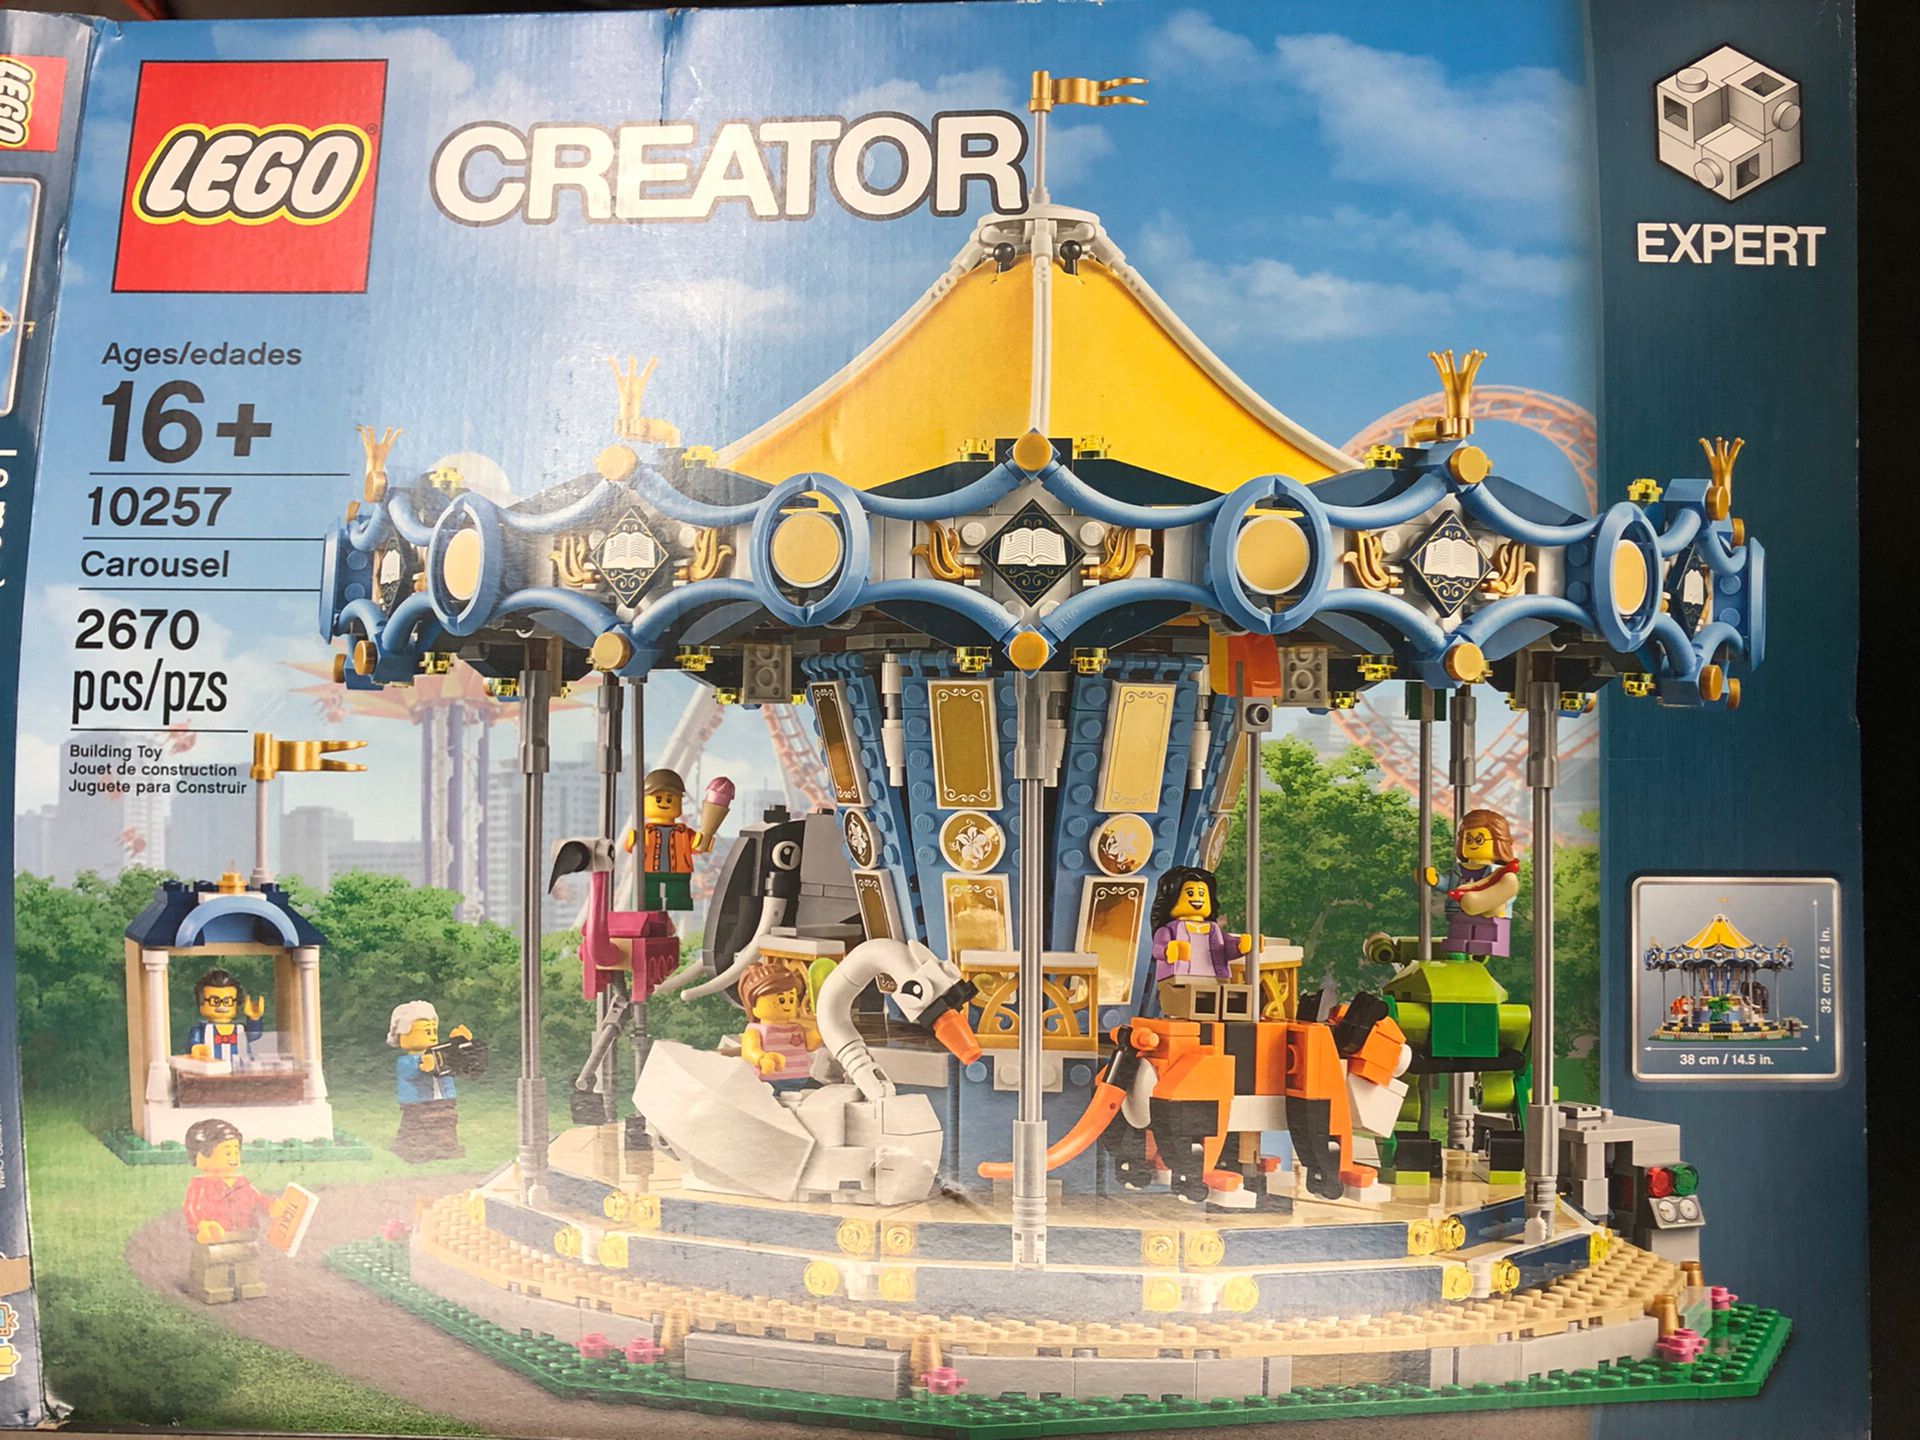 Lego Creator Carousel Expert - RETIRED SET for Sale Yorba Linda, CA - OfferUp